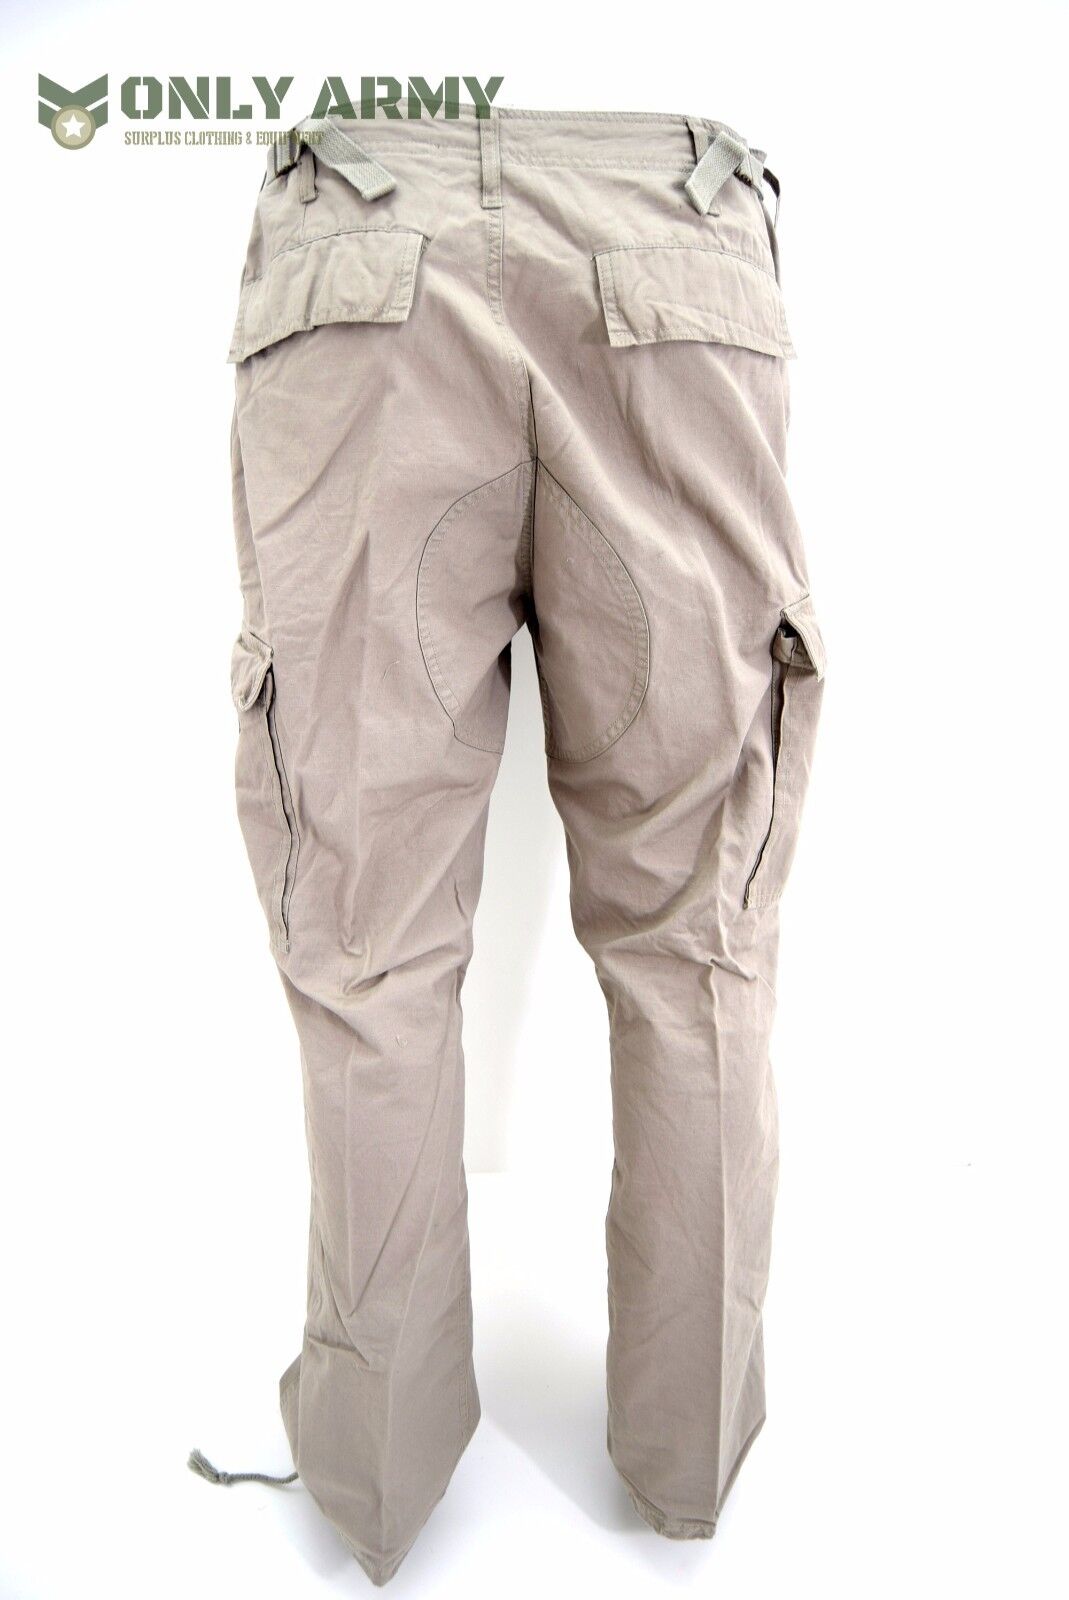 Army Tactical Ripstop Cargo Trouser Lightweight Combat Pants Stone Beige BDU